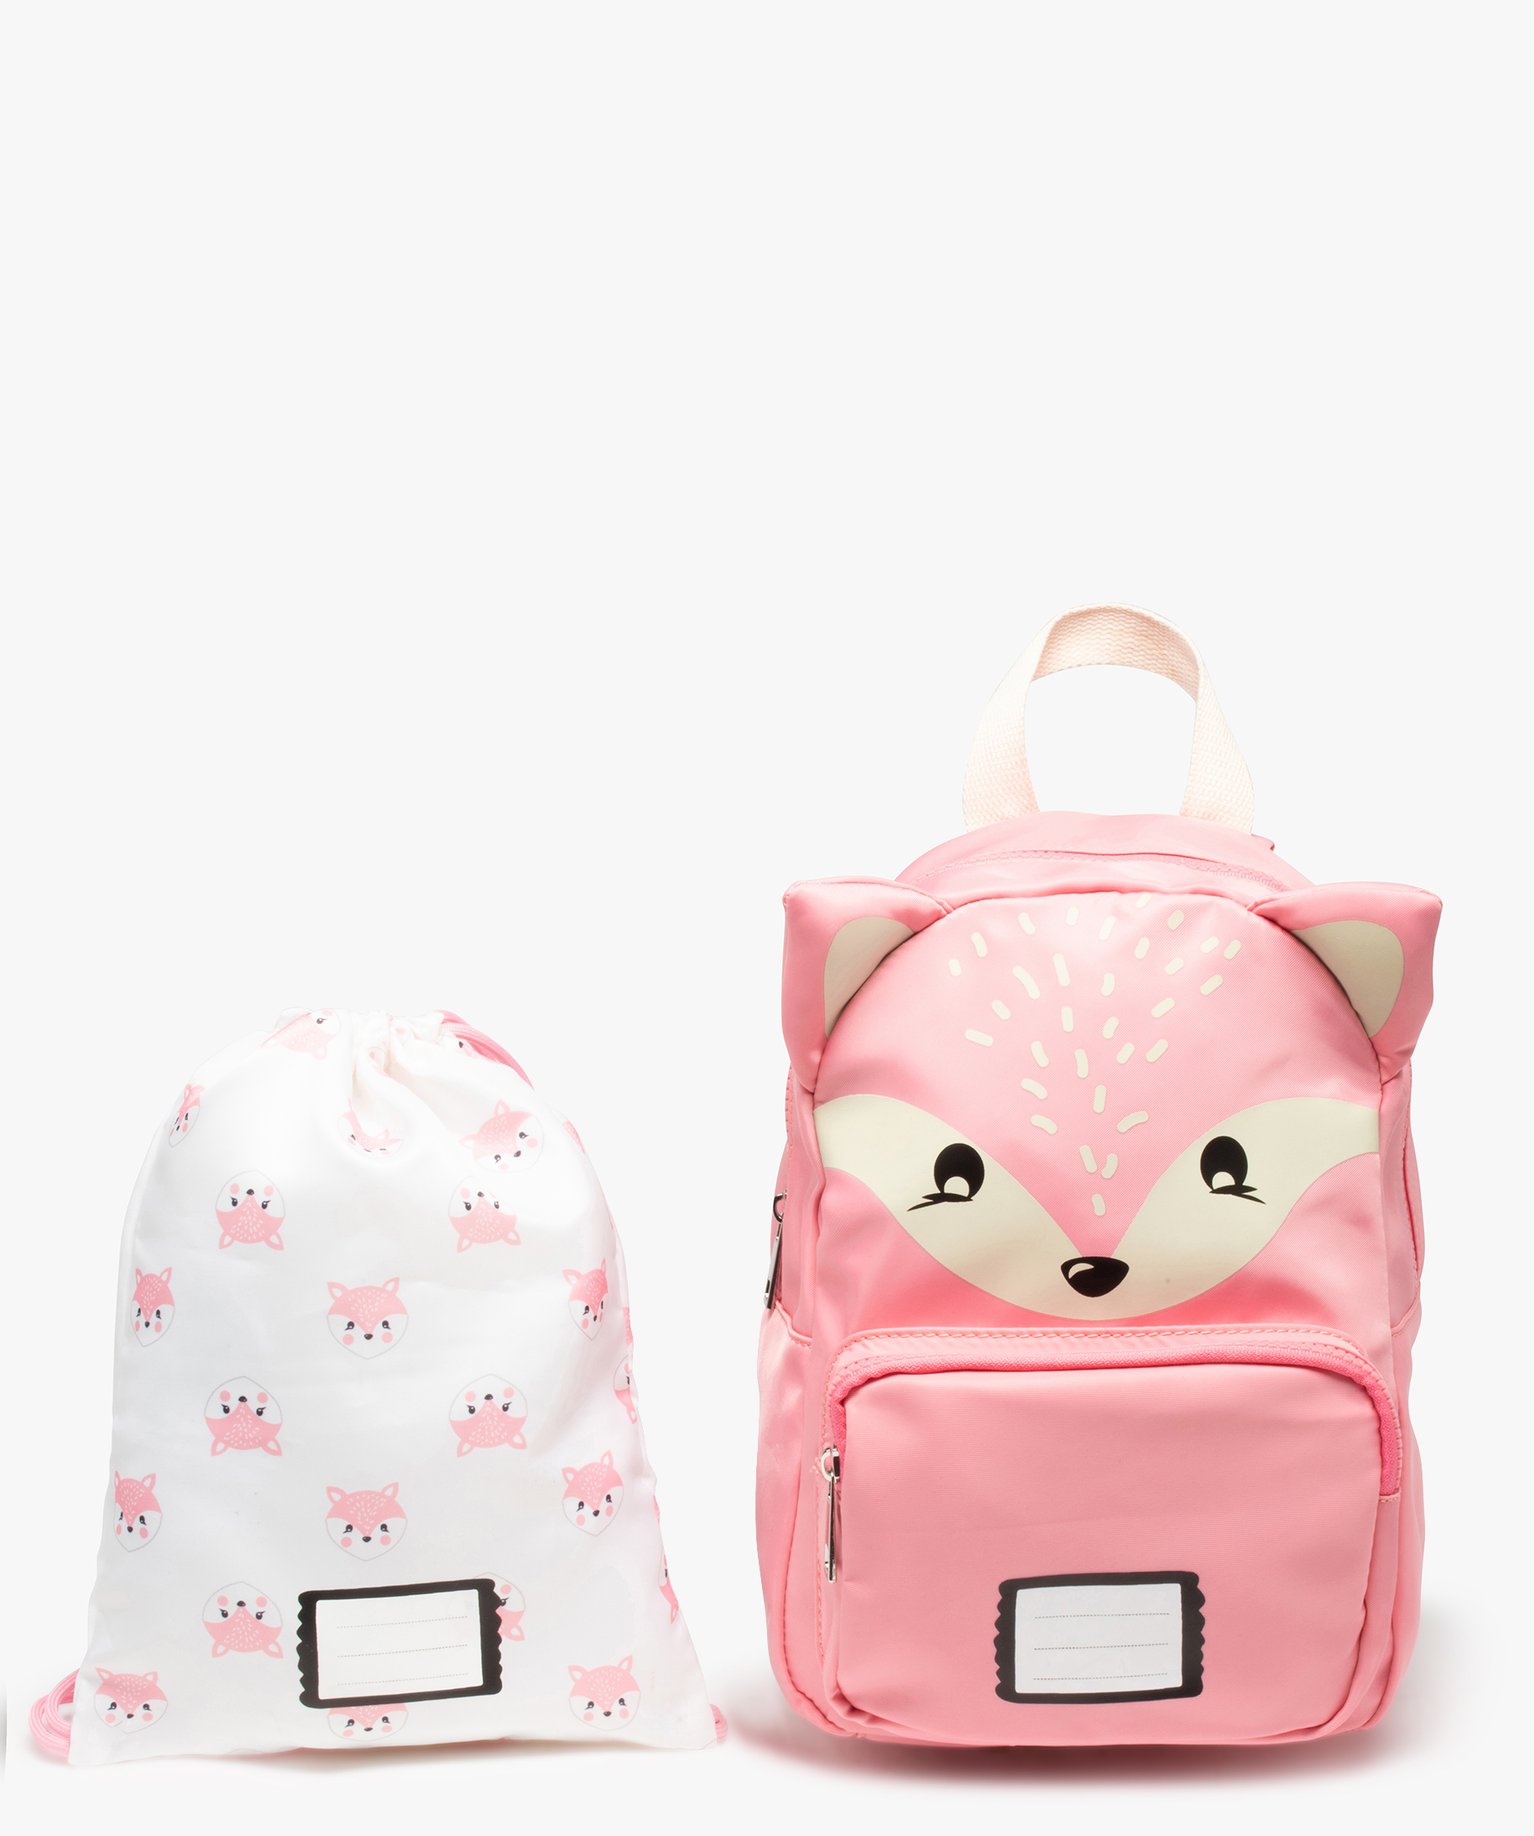 sac a dos maternelle fille imprime renard avec pochette assortie rose